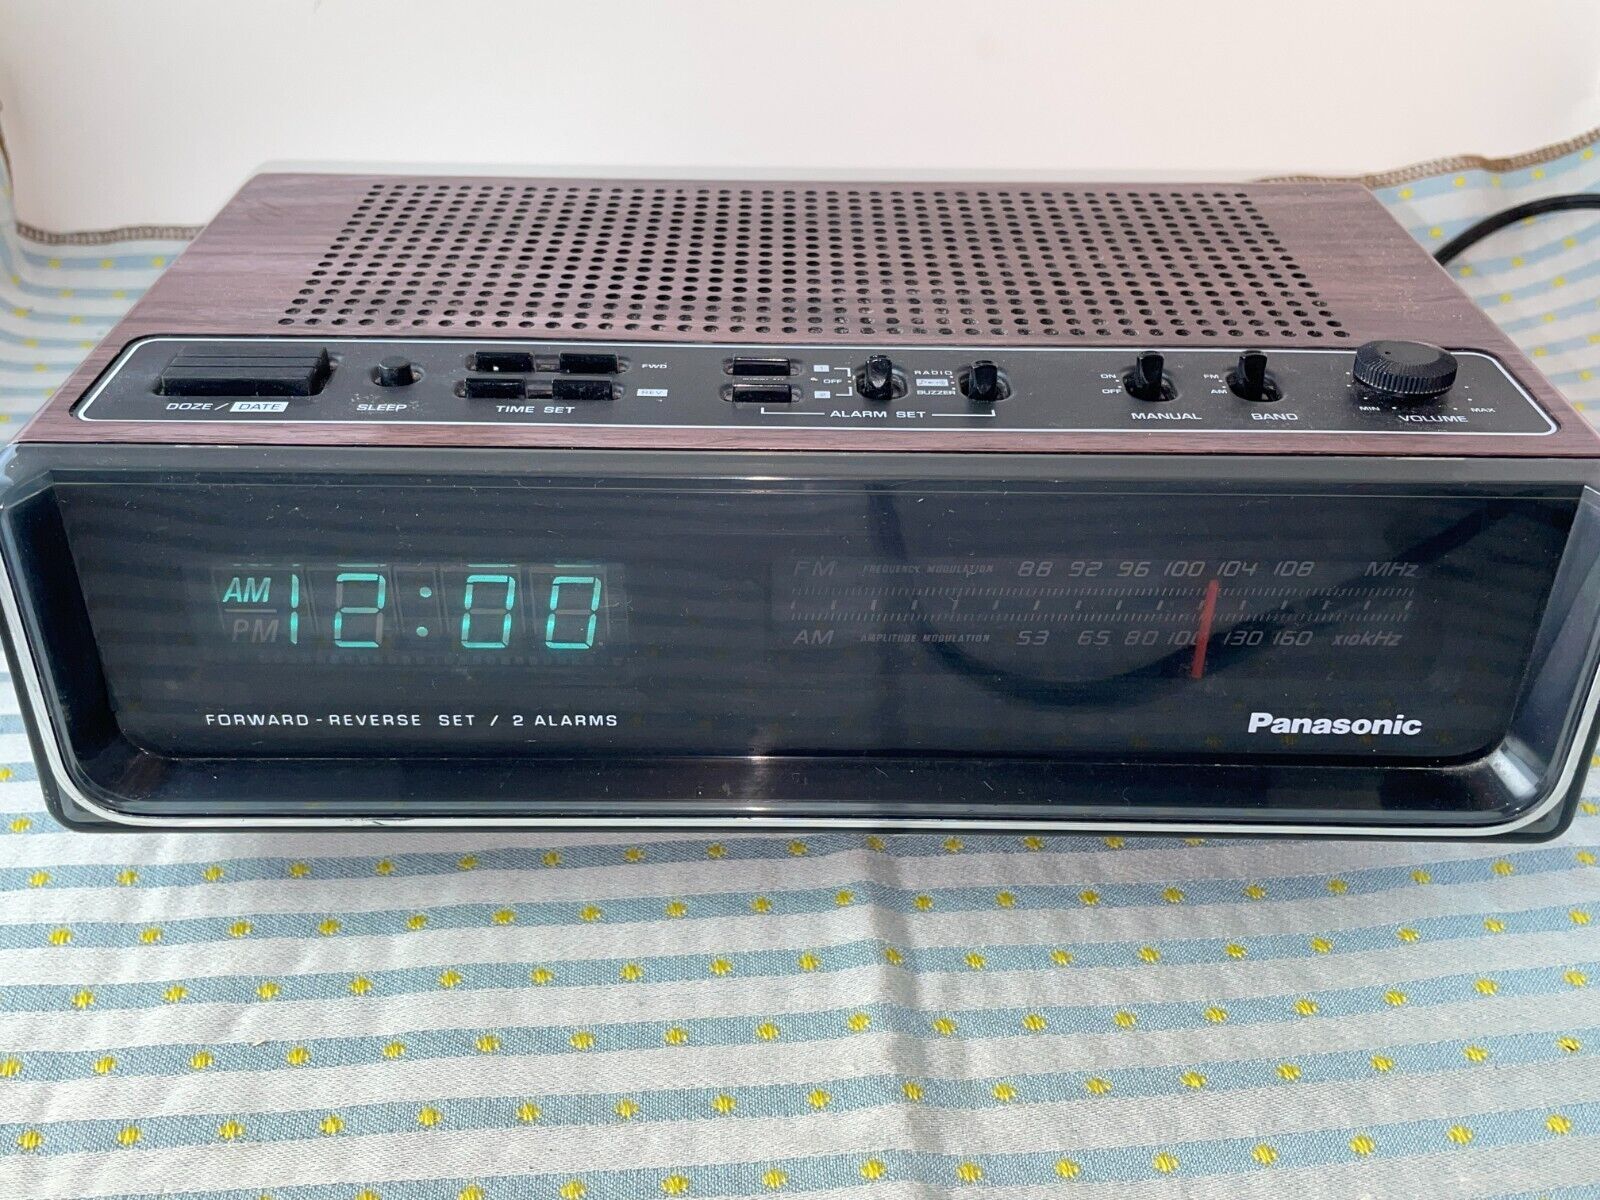 Panasonic RC-95 Vintage Clock Radio Tested Working - Dual Alarm Time Date FM/AM